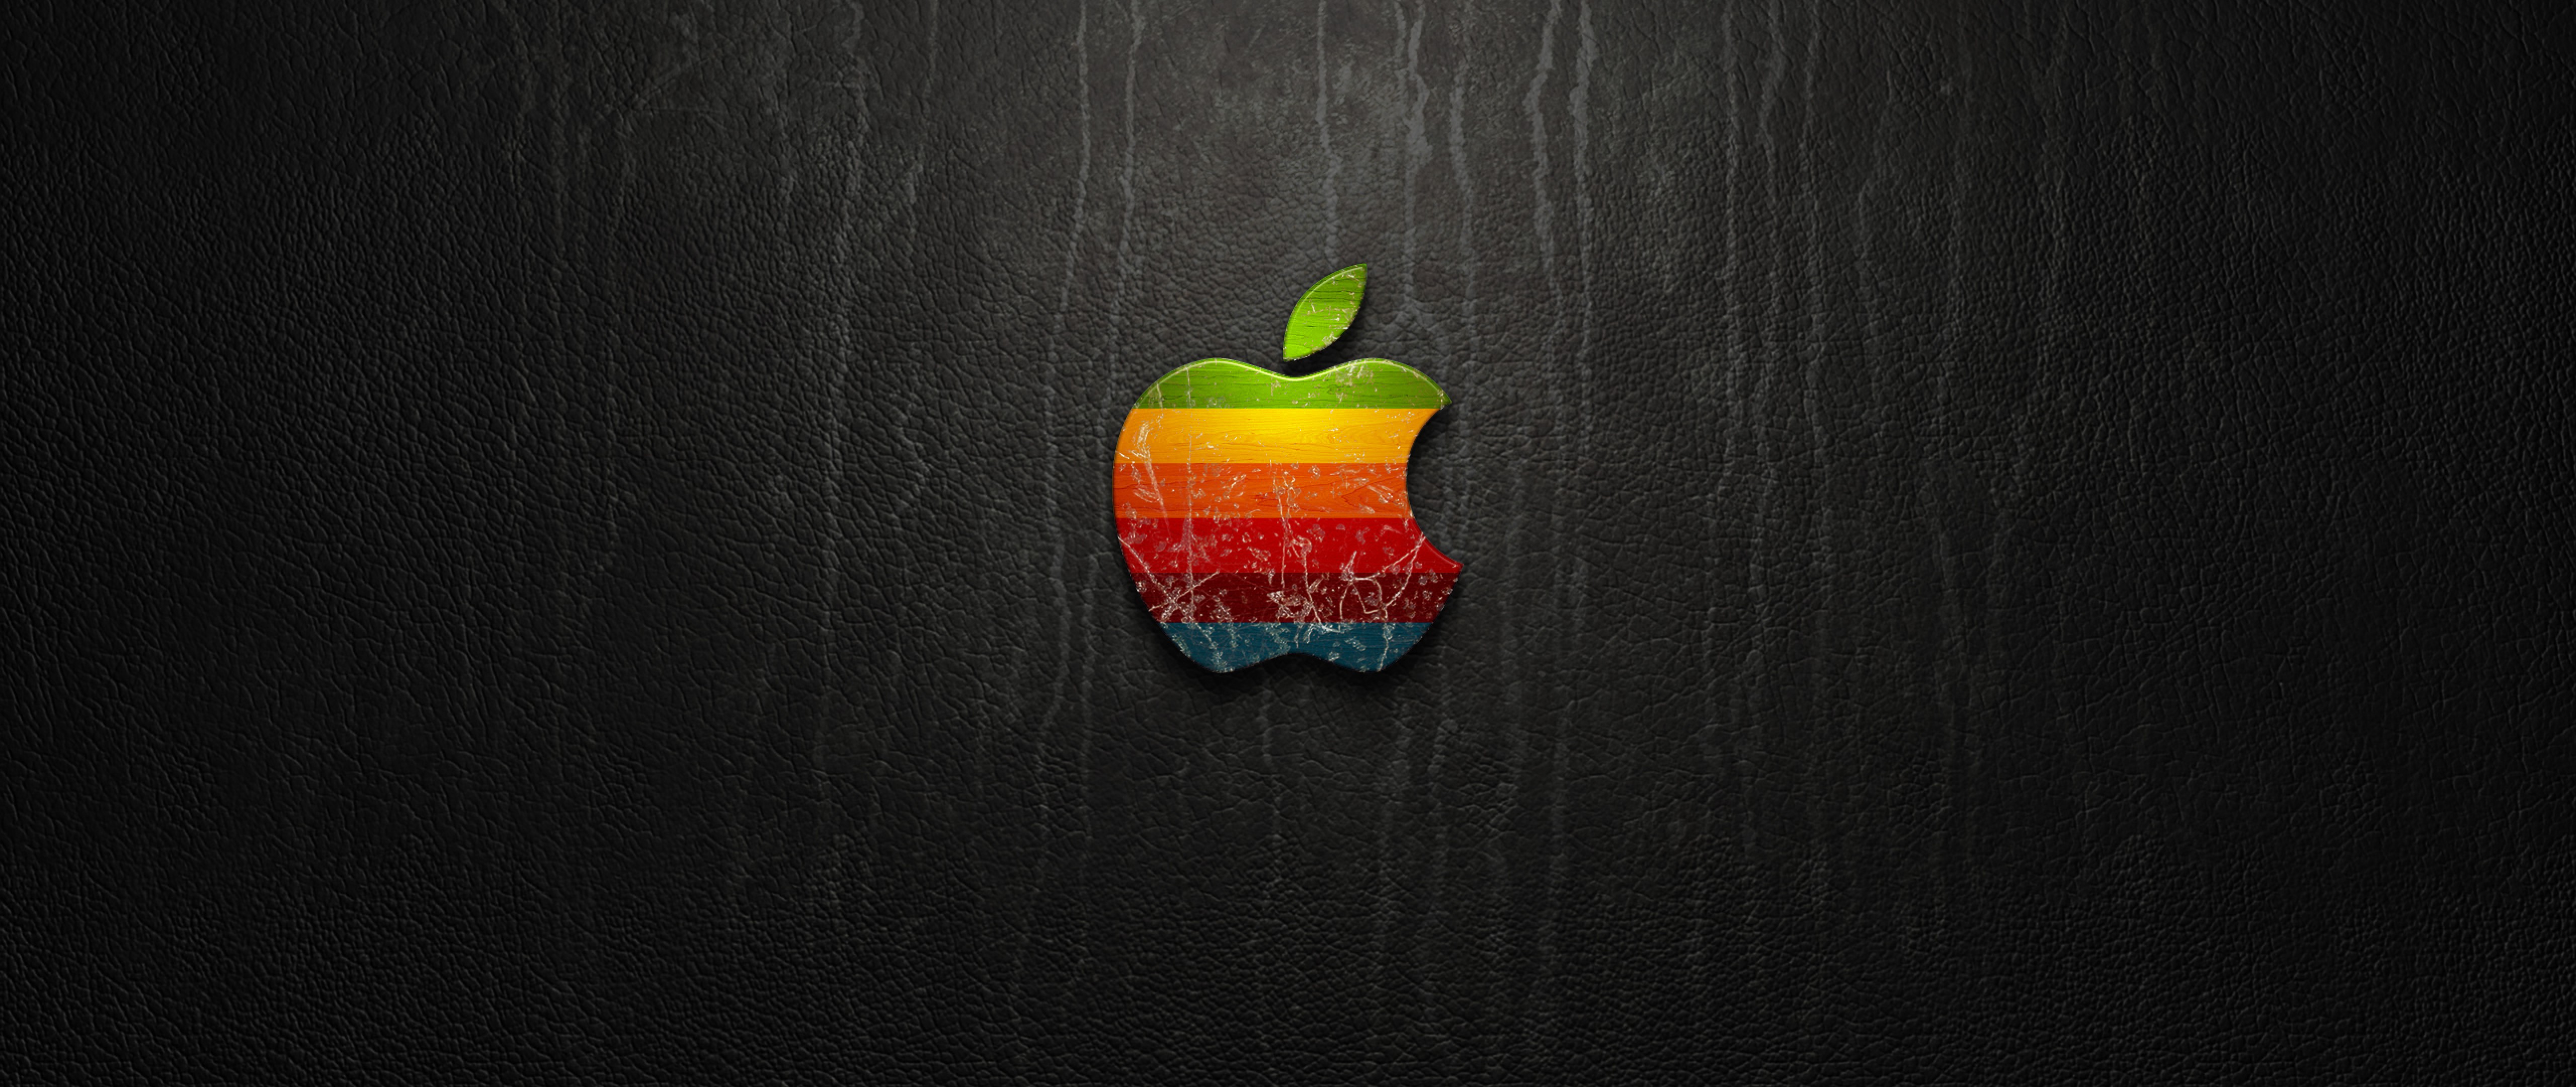 Apple Ultra HD Wallpapers - Wallpaper Cave